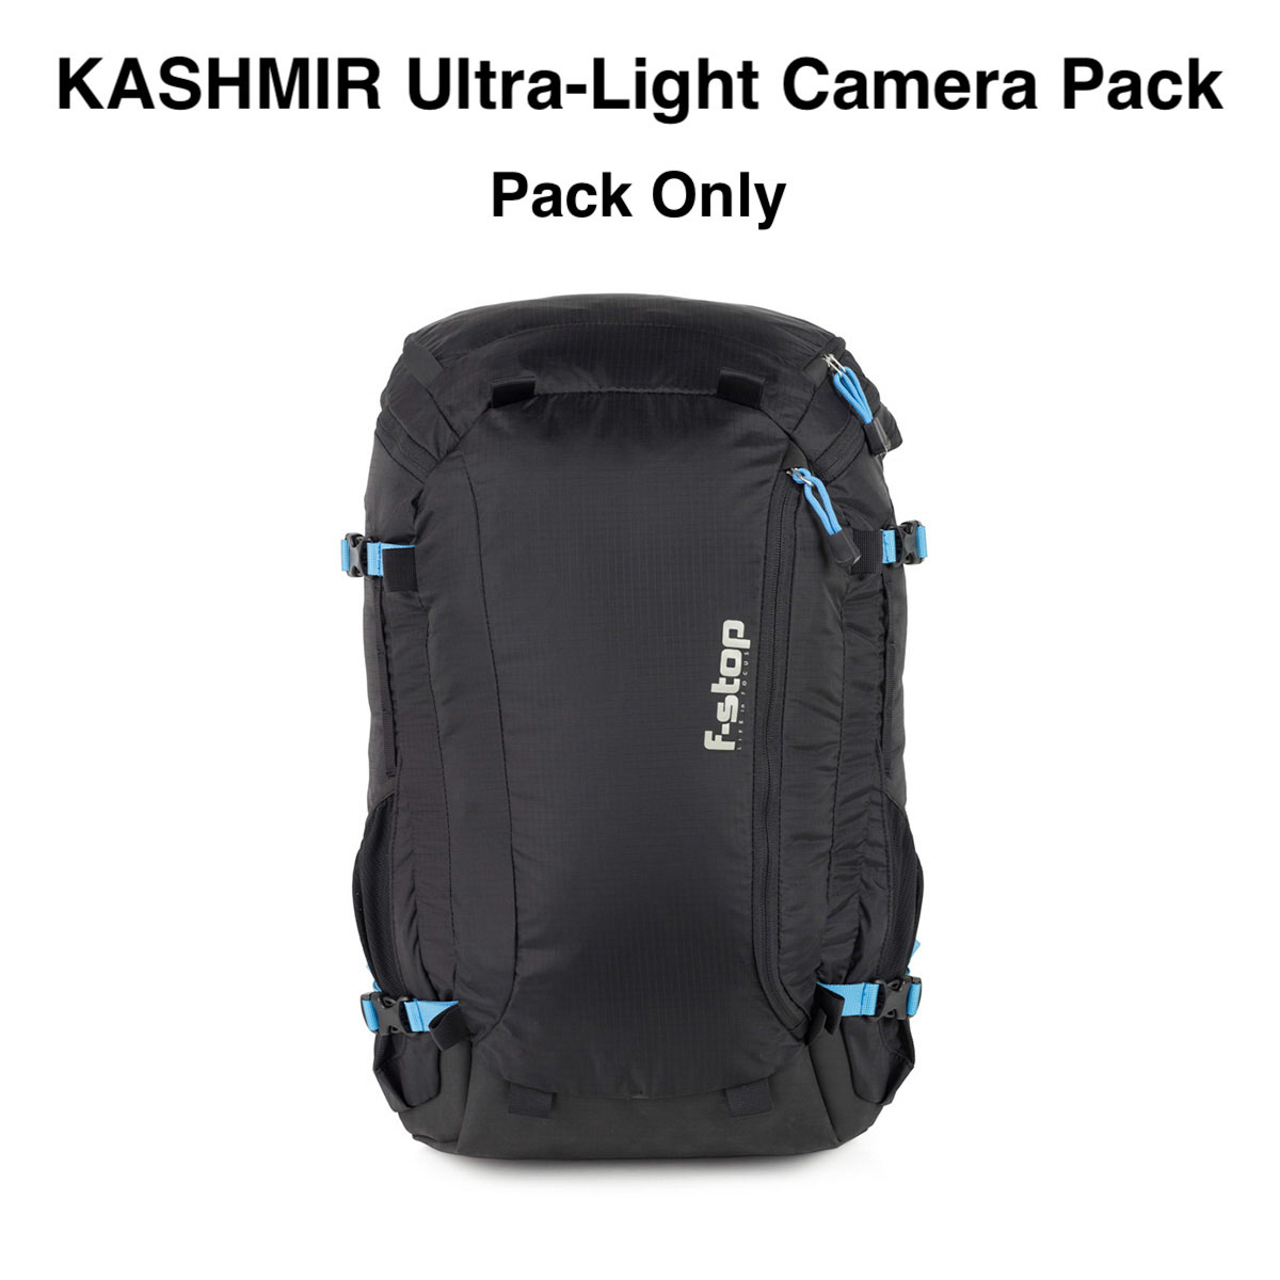 f-stop Kashmir 30 liter ultra light adventure and camera backpack pack only bundle